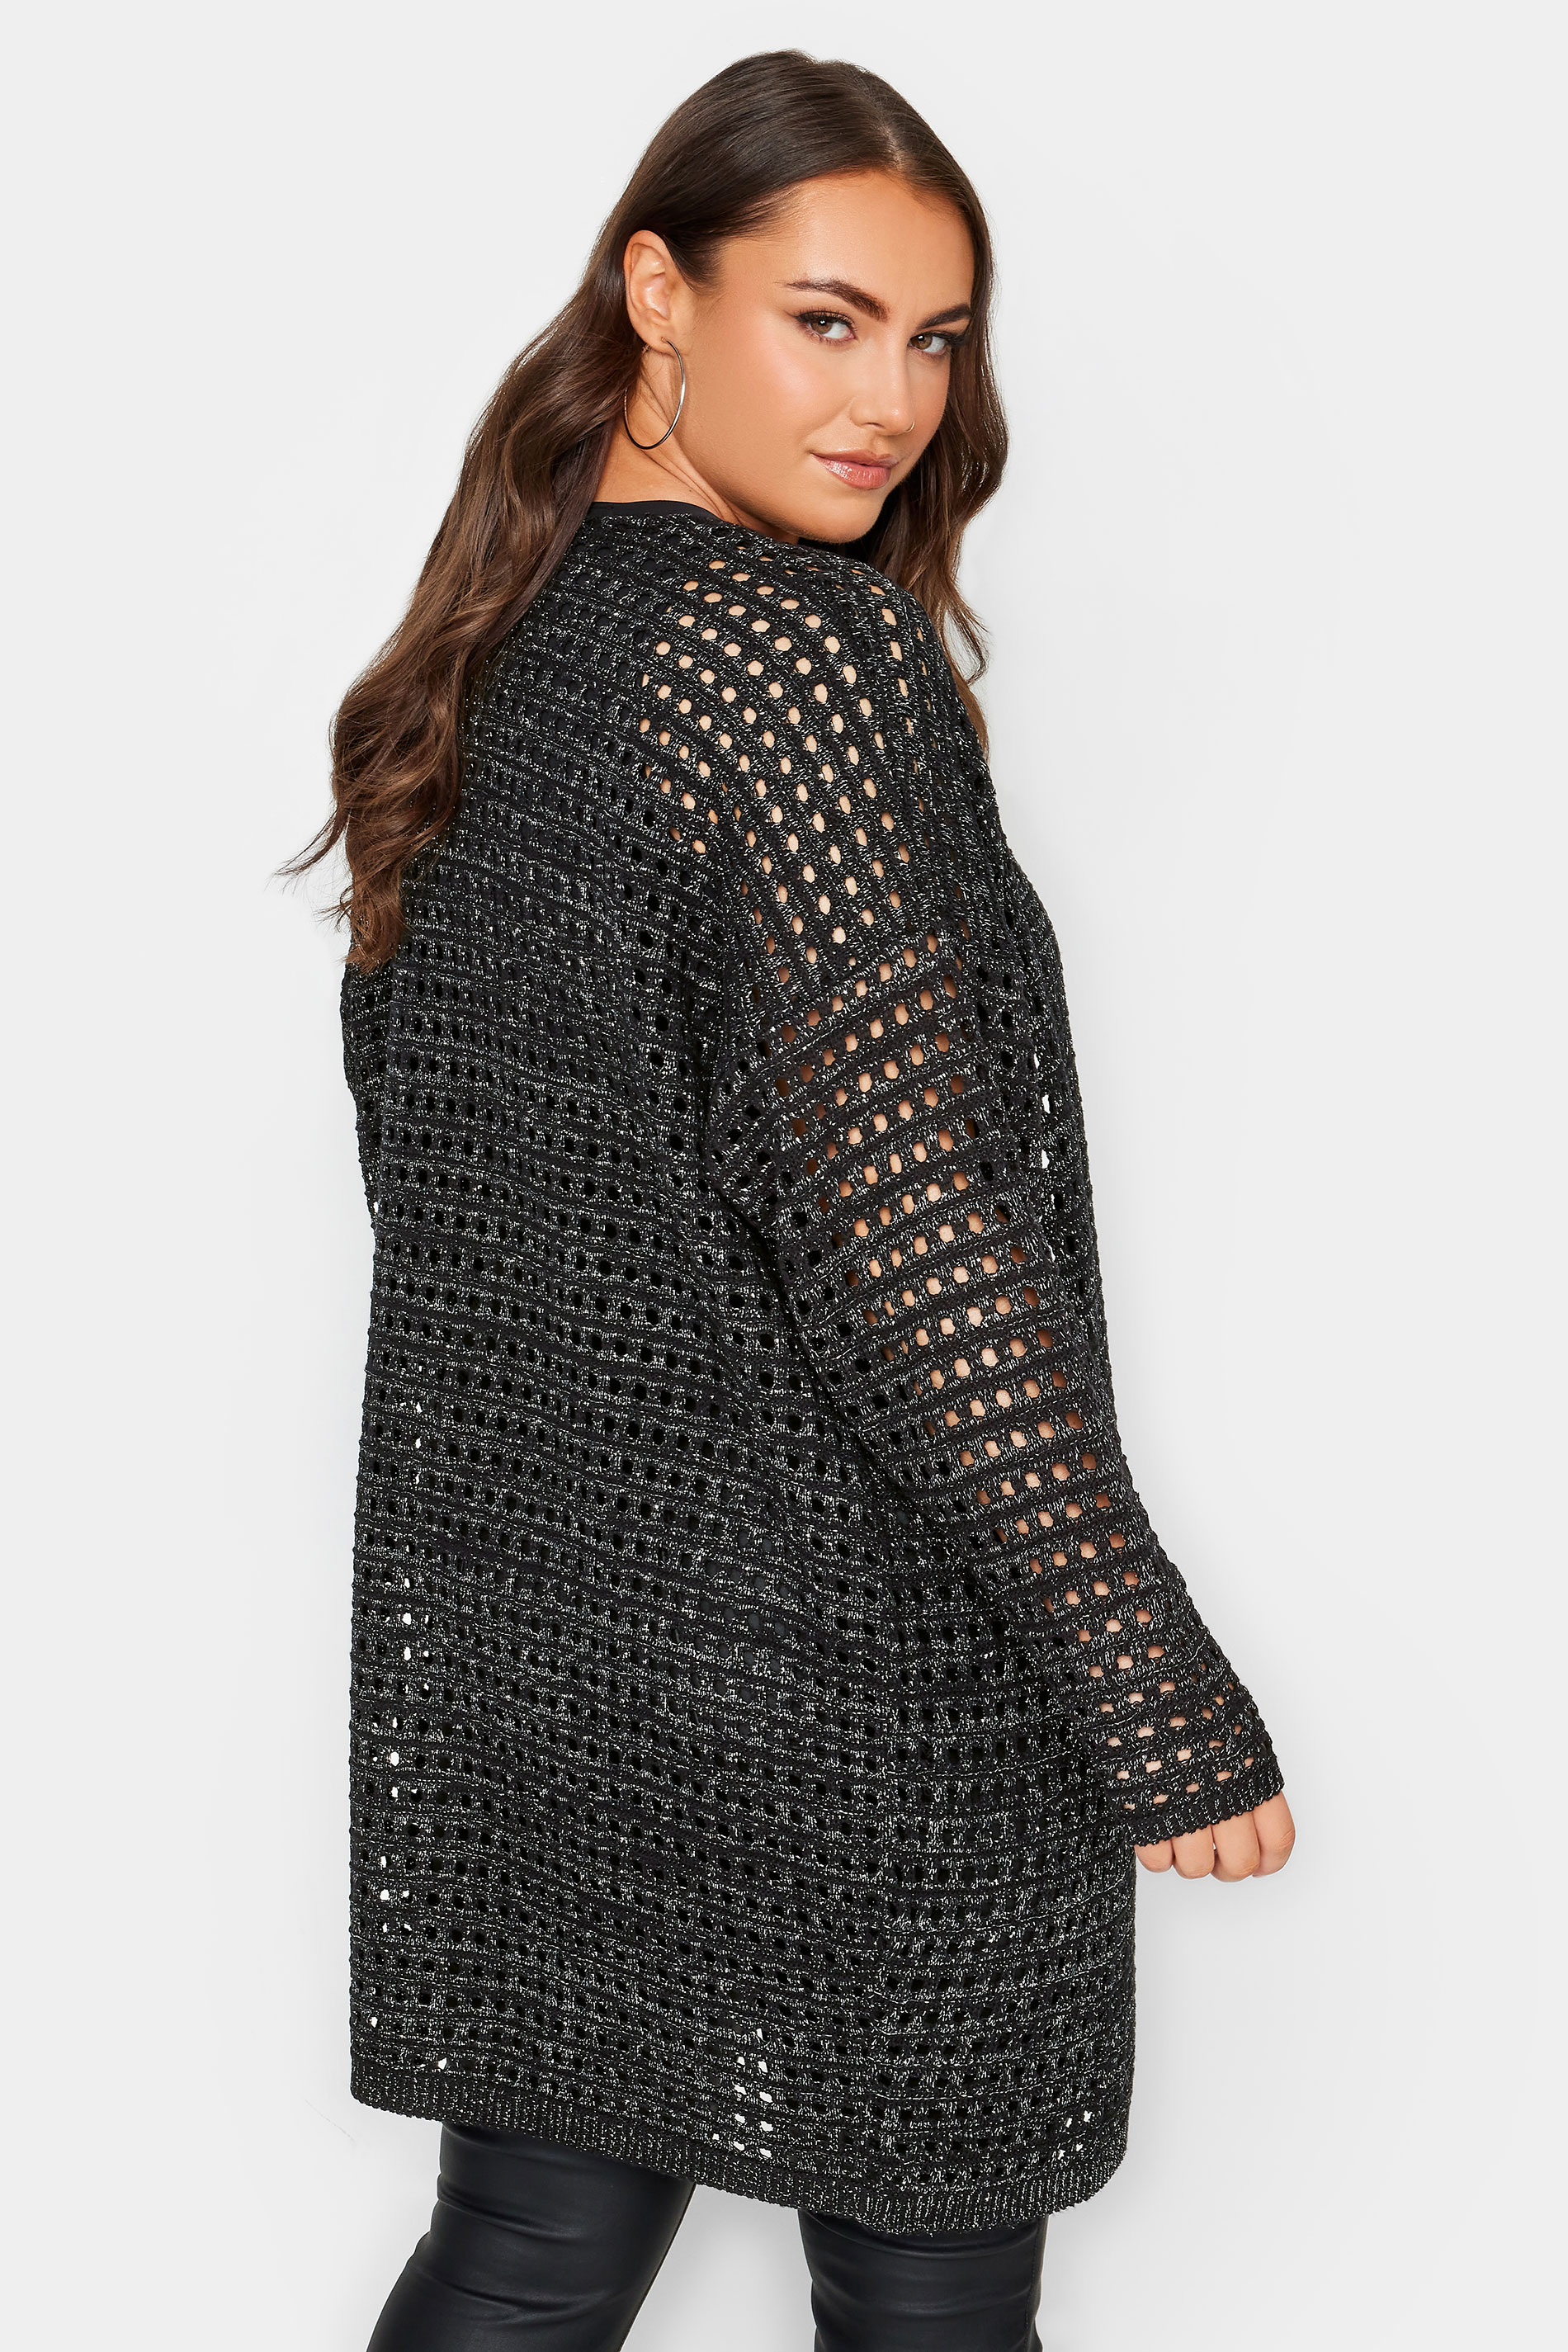 YOURS Plus Size Black Metallic Crochet Cardigan | Yours Clothing 3